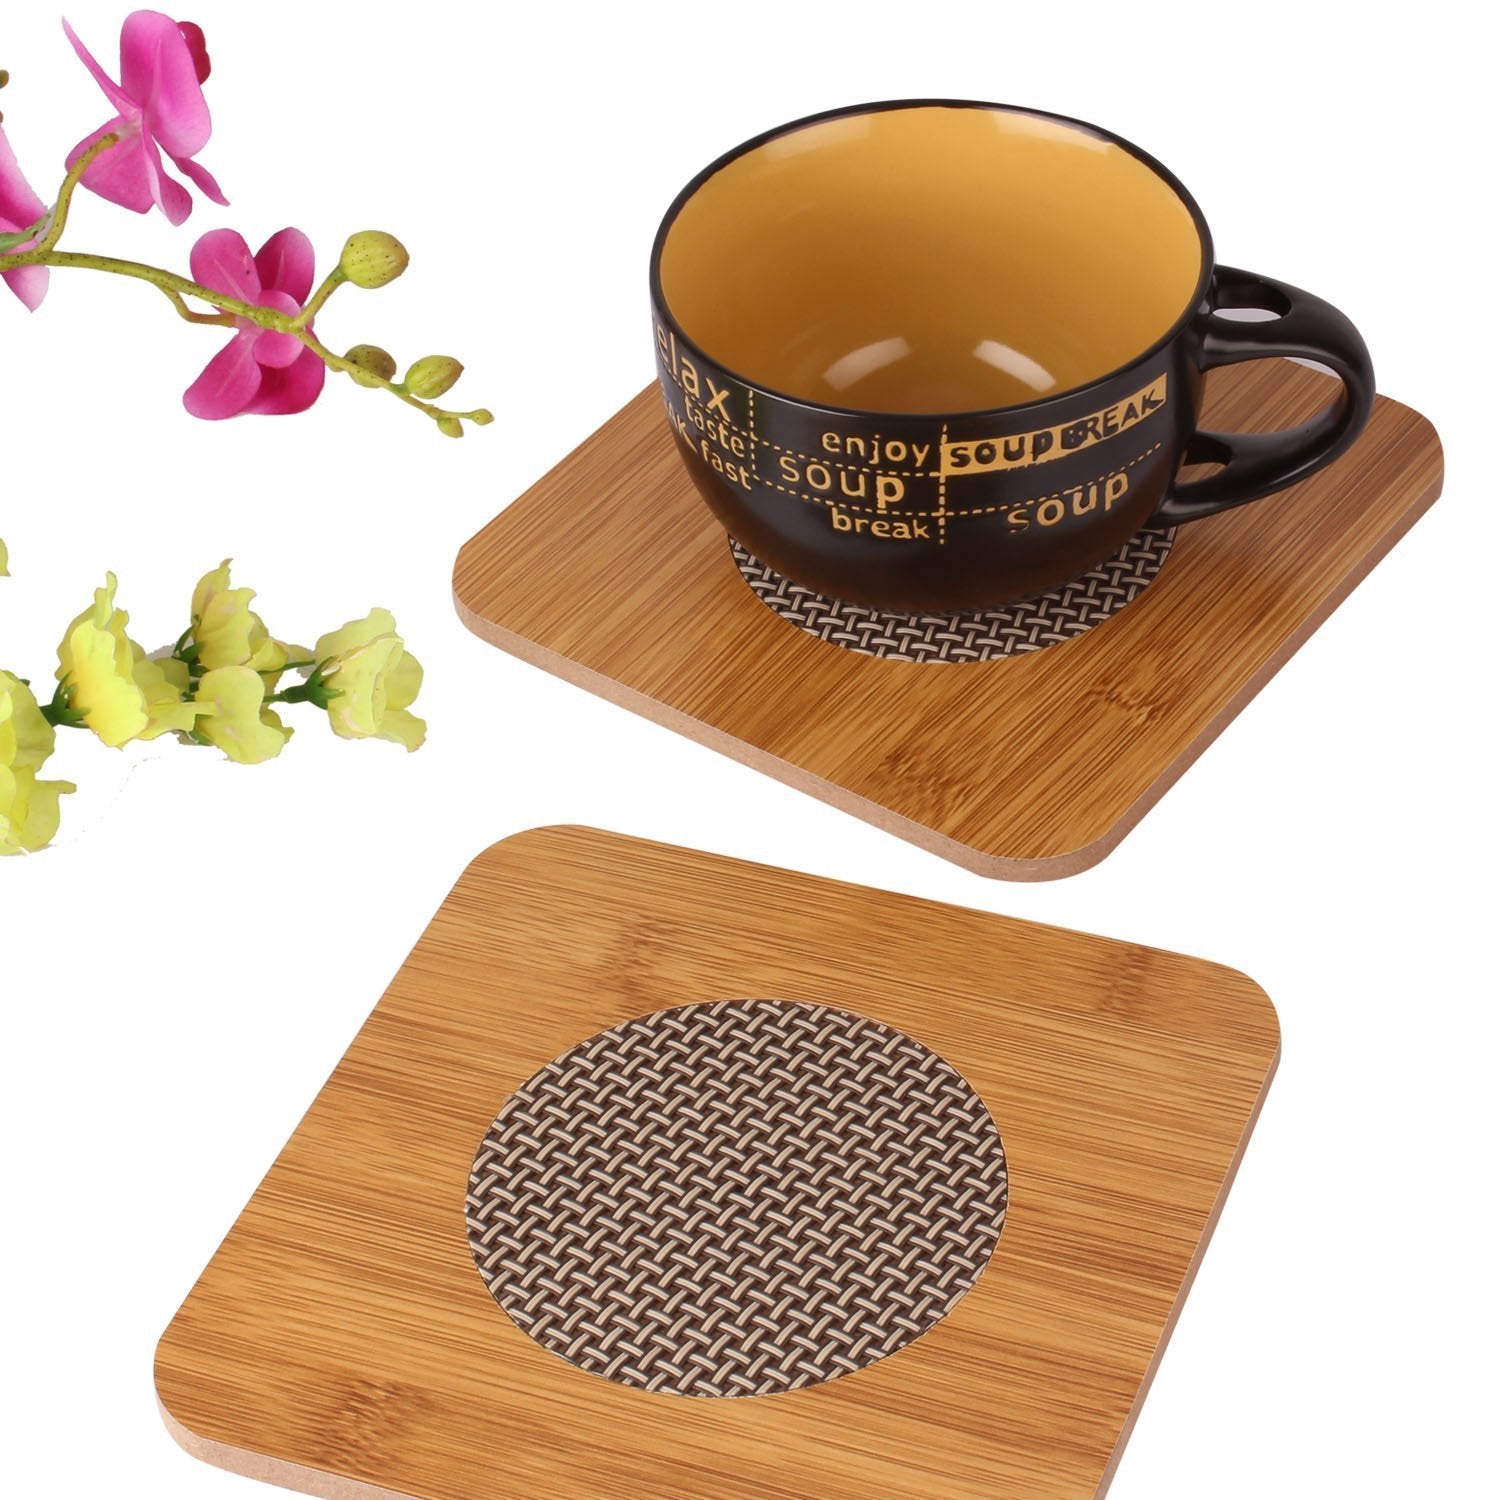 Wooden Anti Hot Heat Resistant Pot Holder - Home Essentials Store Retail